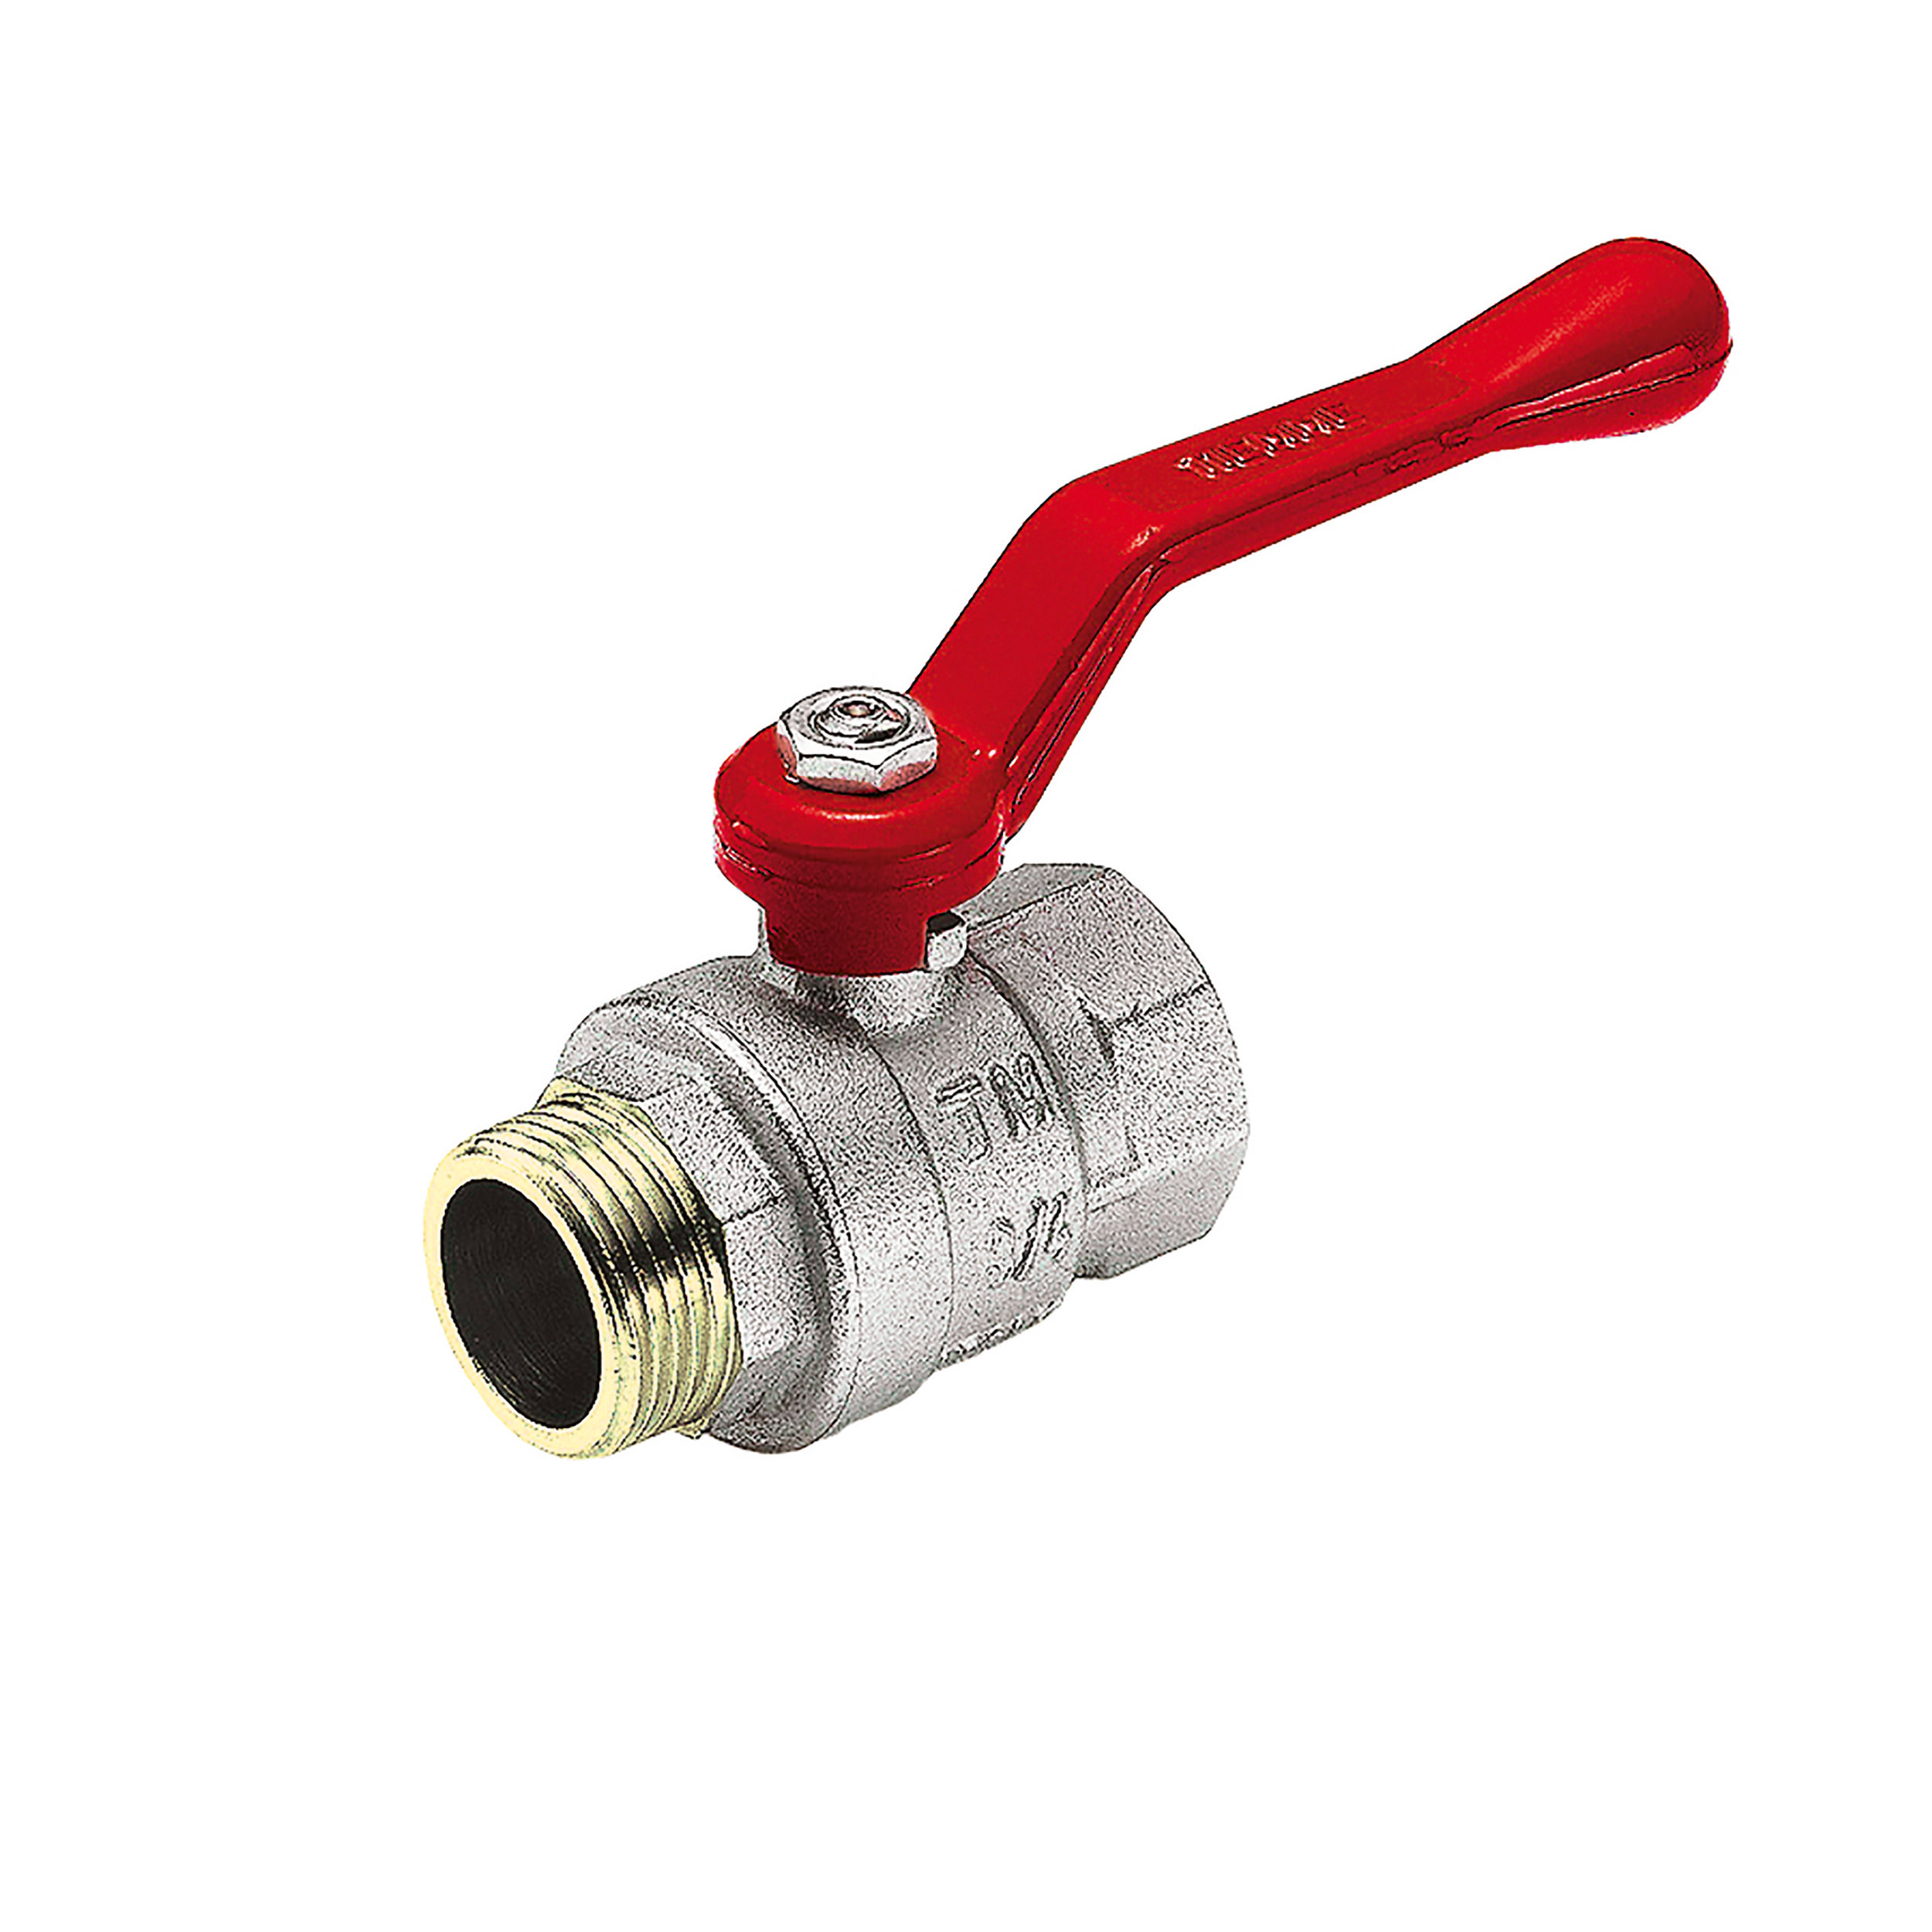 Ball valve, metal handle, full flow, max. operating pressure 435 psi, length: 57 mm, AF 23mm, DN 10, G⅜ f–m, t1/t2: 12/11 mm